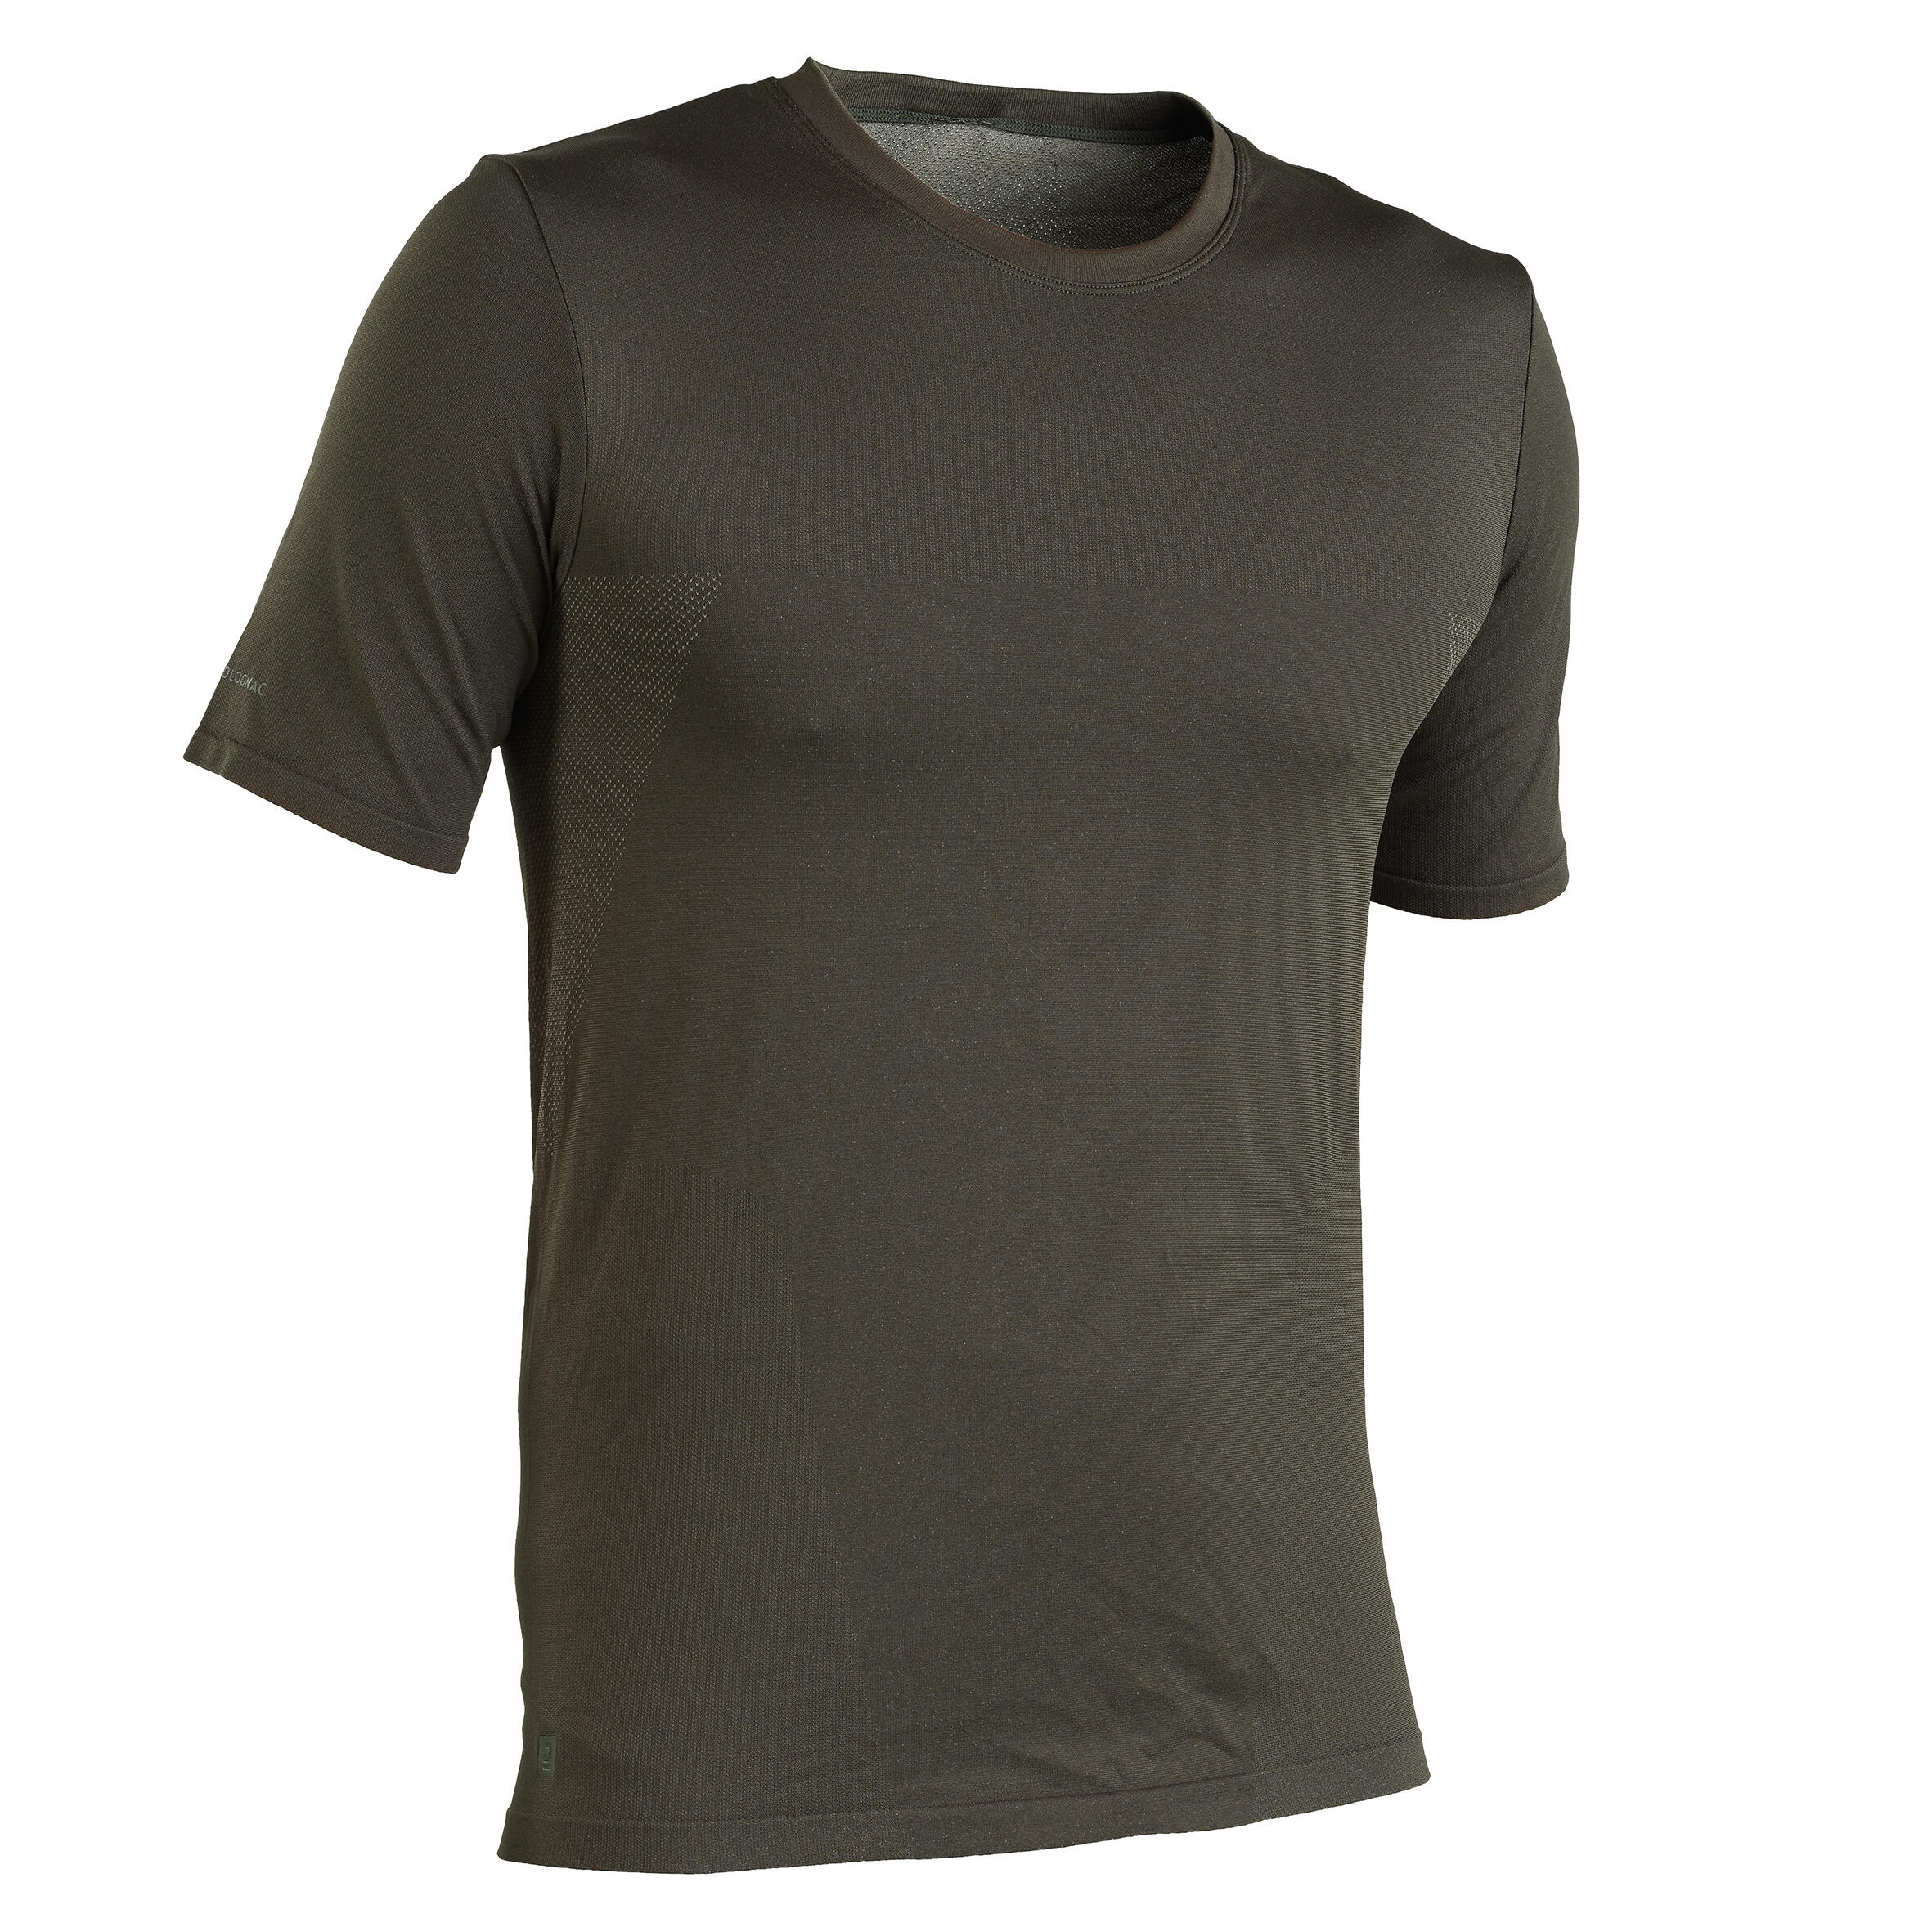 SOLOGNAC Men's Country Sport Short-Sleeved Lightweight Breathable T-Shirt - 500 Green